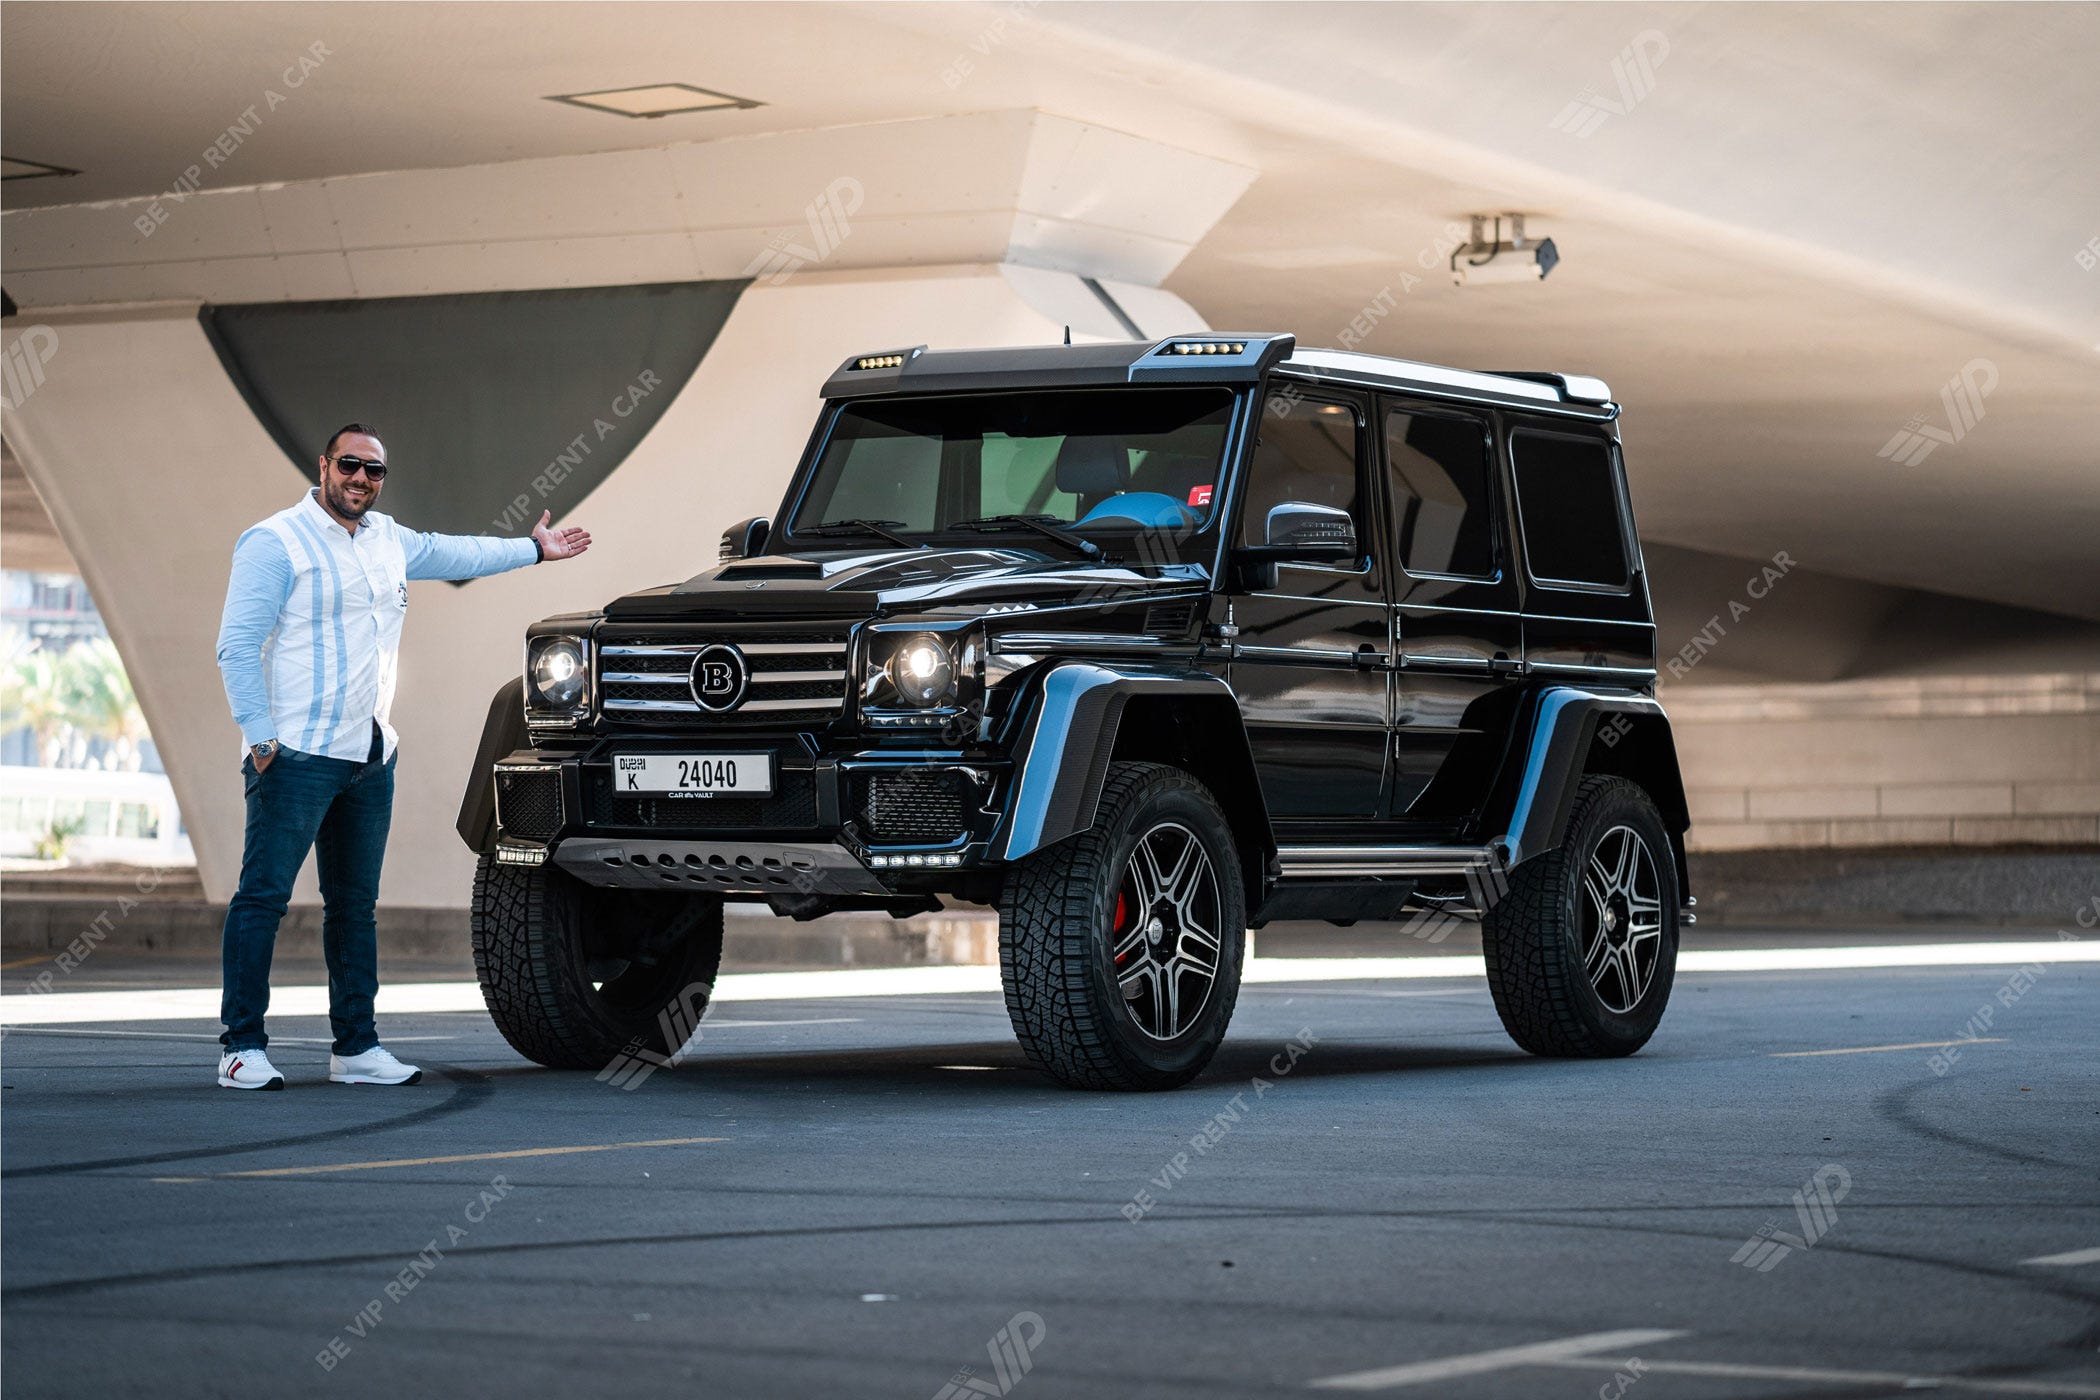 Explore the UAE Desert with the amazing Mercedes G500